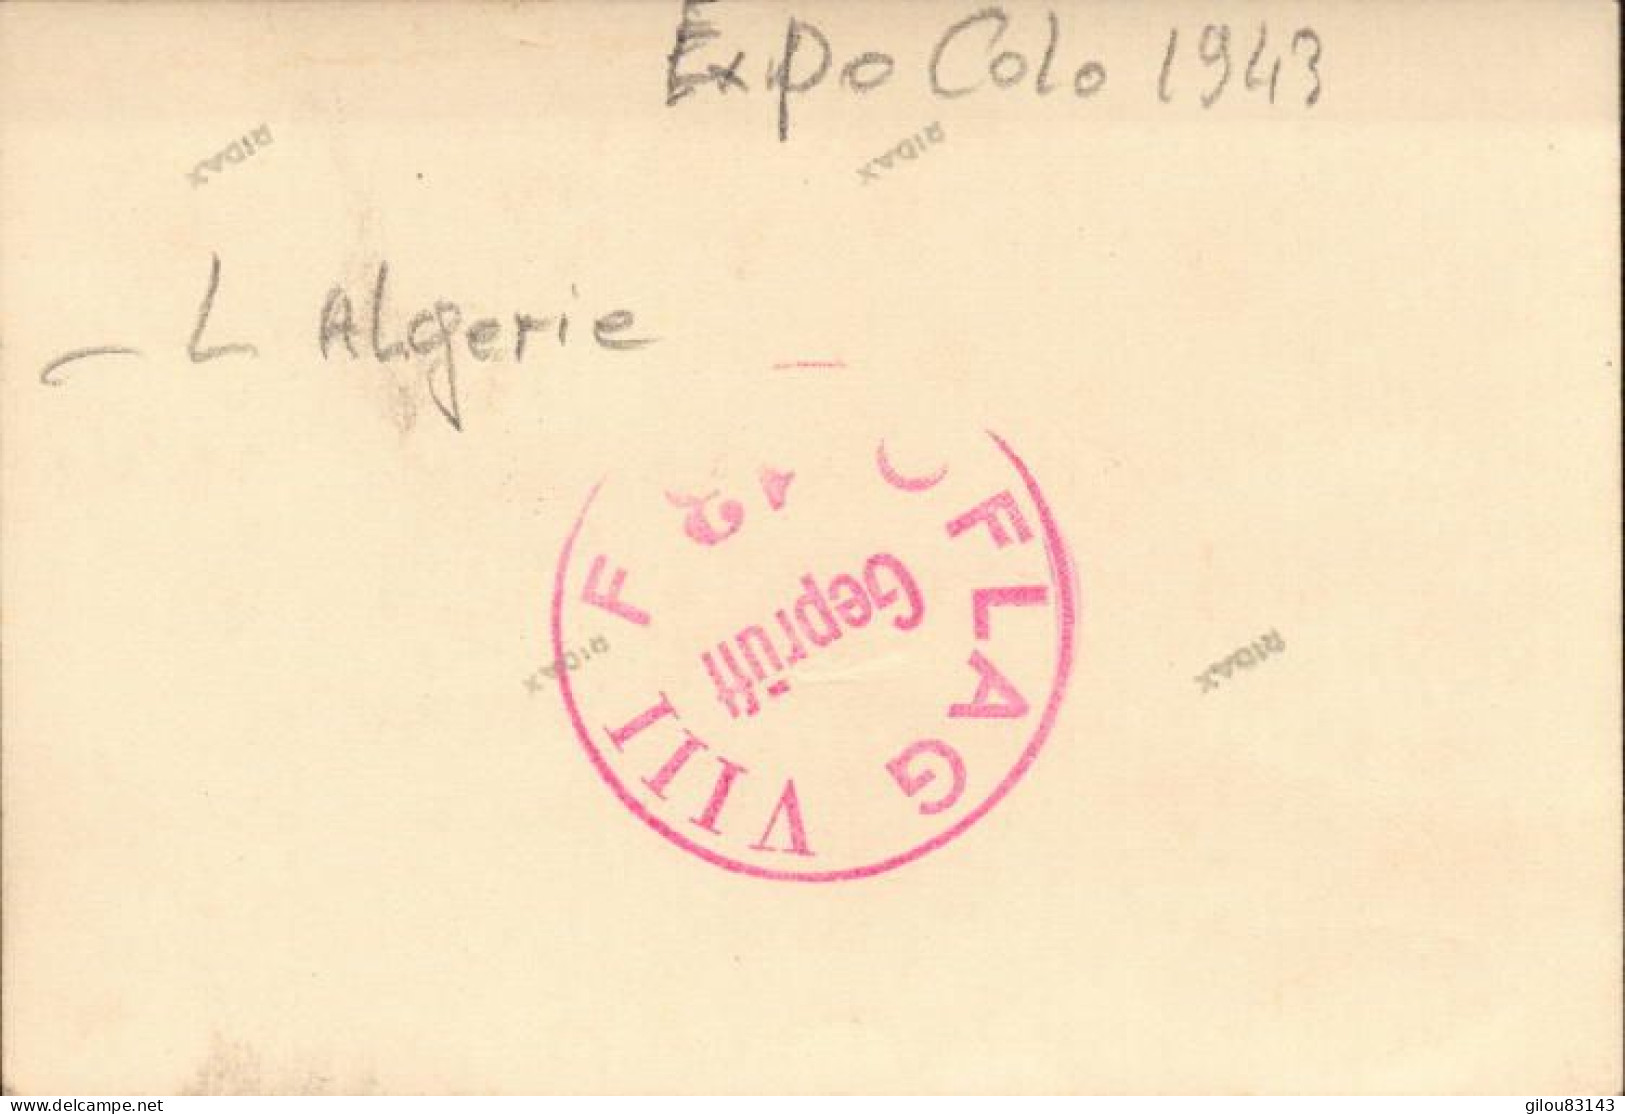 Camp De Prisonniers, Oflag VIII F, Expo Colo 1943, L Algerie - War, Military